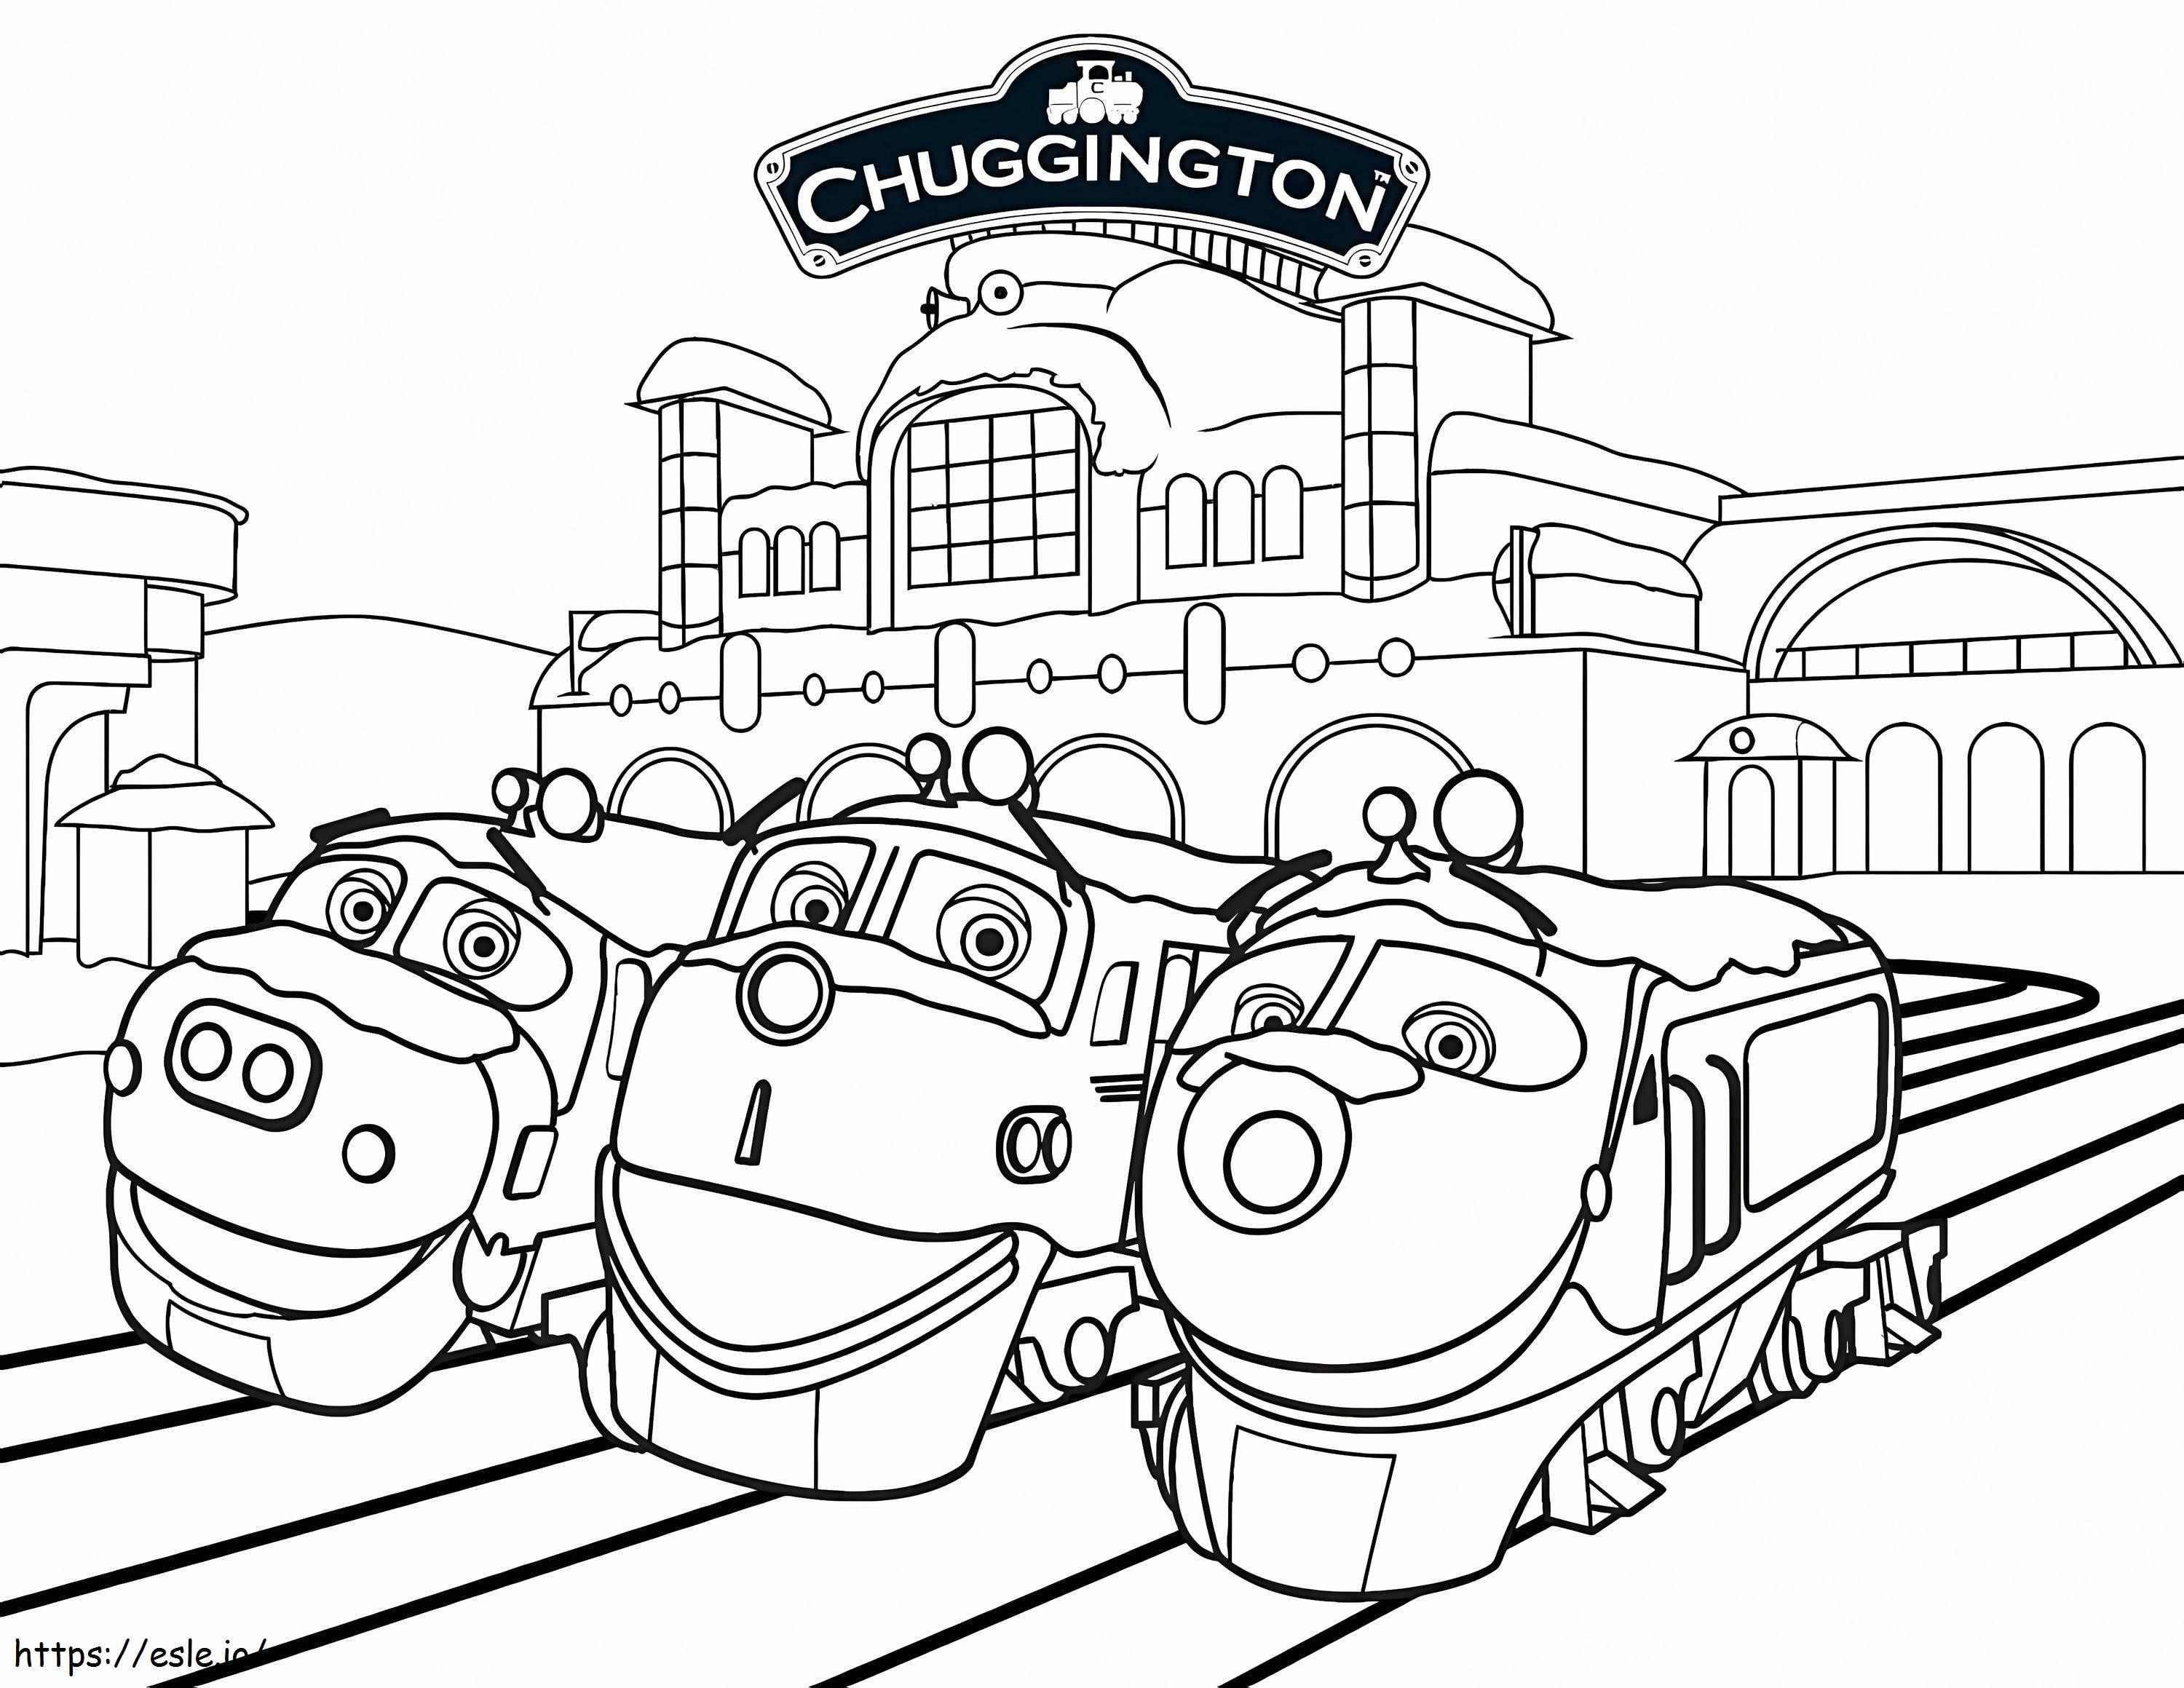 Chuggington 3 coloring page